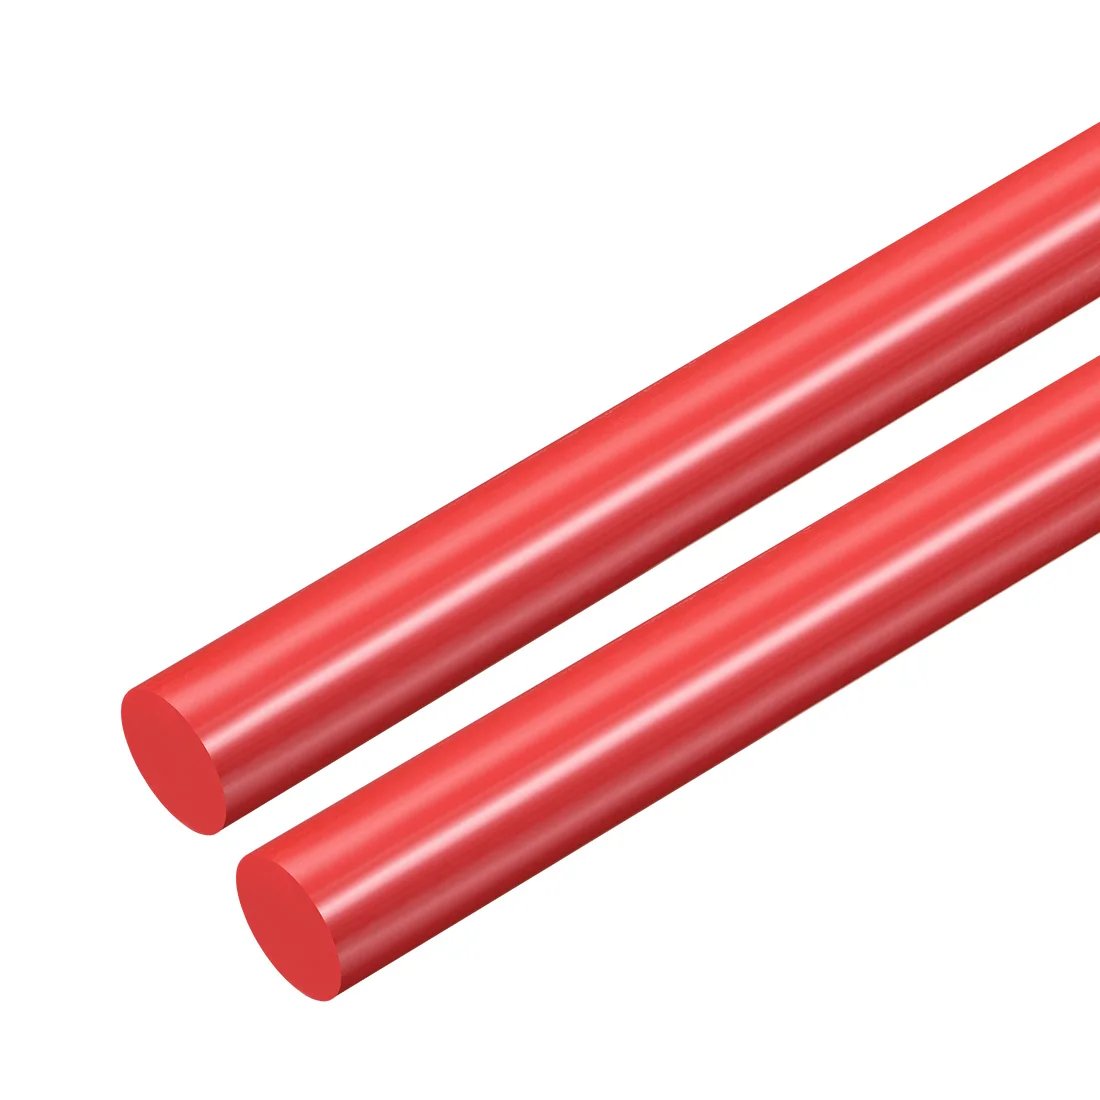 

uxcell Plastic Round Rod, Polyoxymethylene Rods, 15mm Dia 50cm Length Engineering Plastic Round Bars 2pcs Red